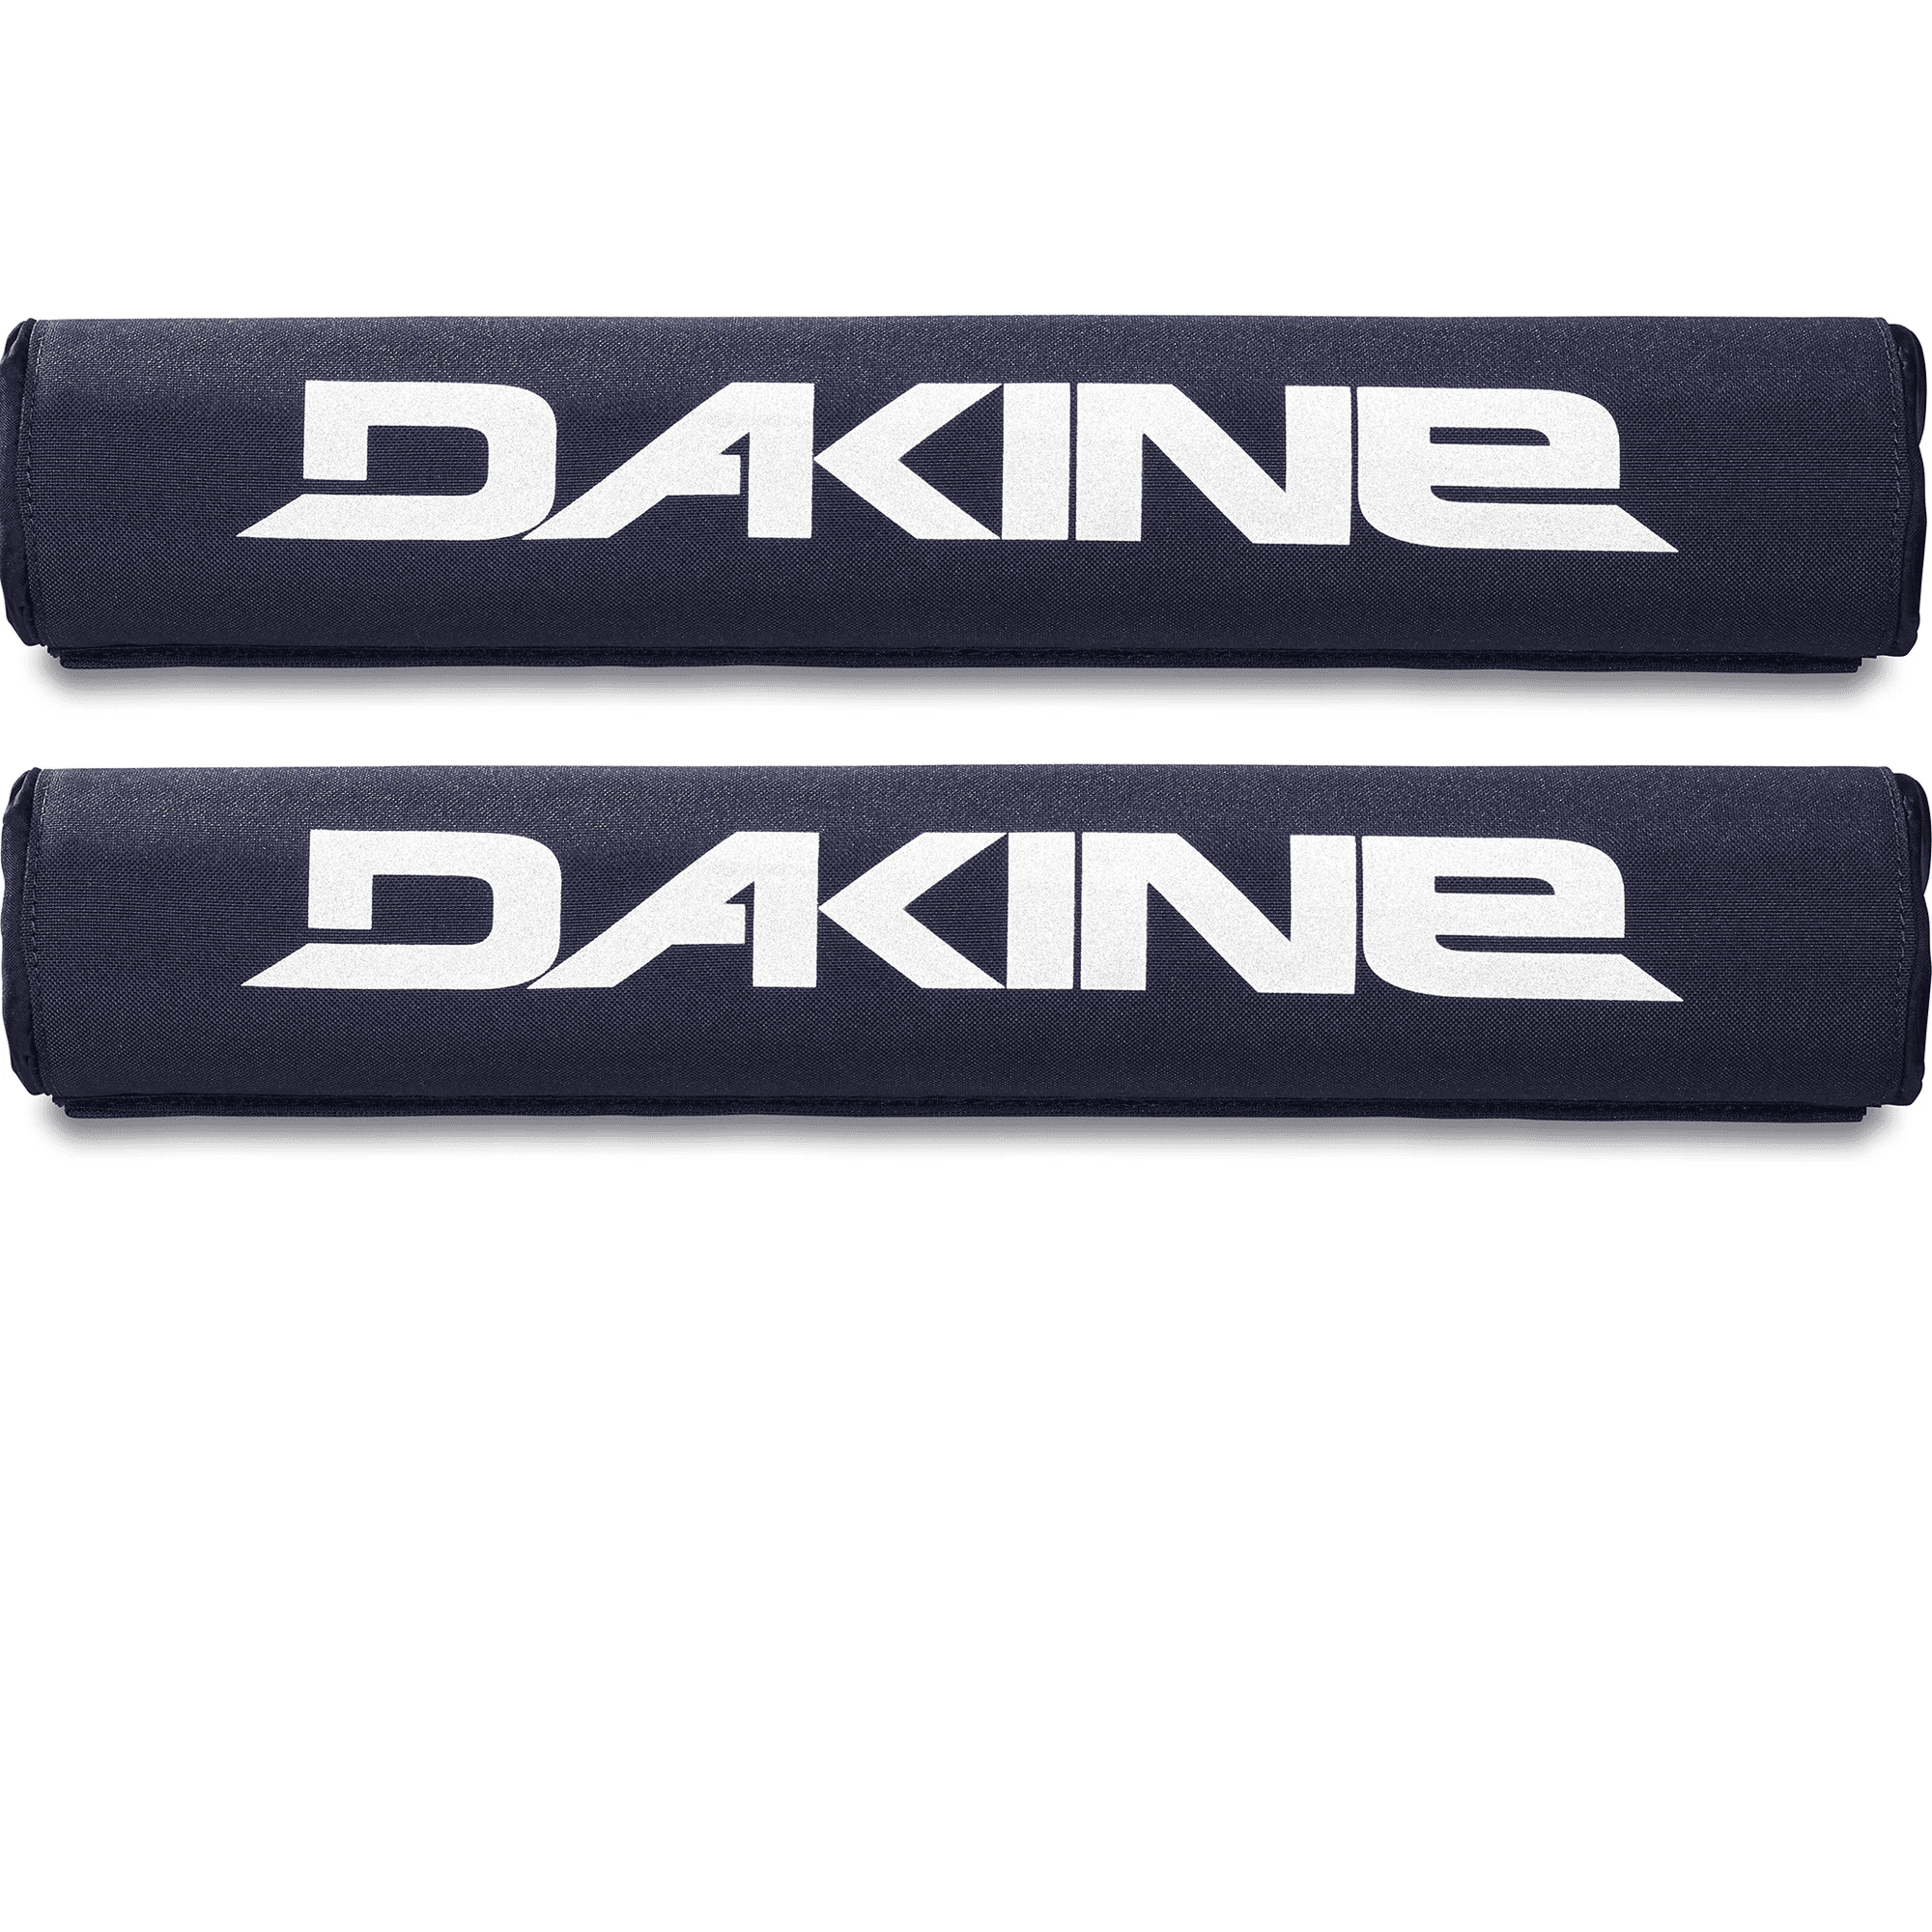 DAKINE RACK PADS 34" 86cm - BLUE